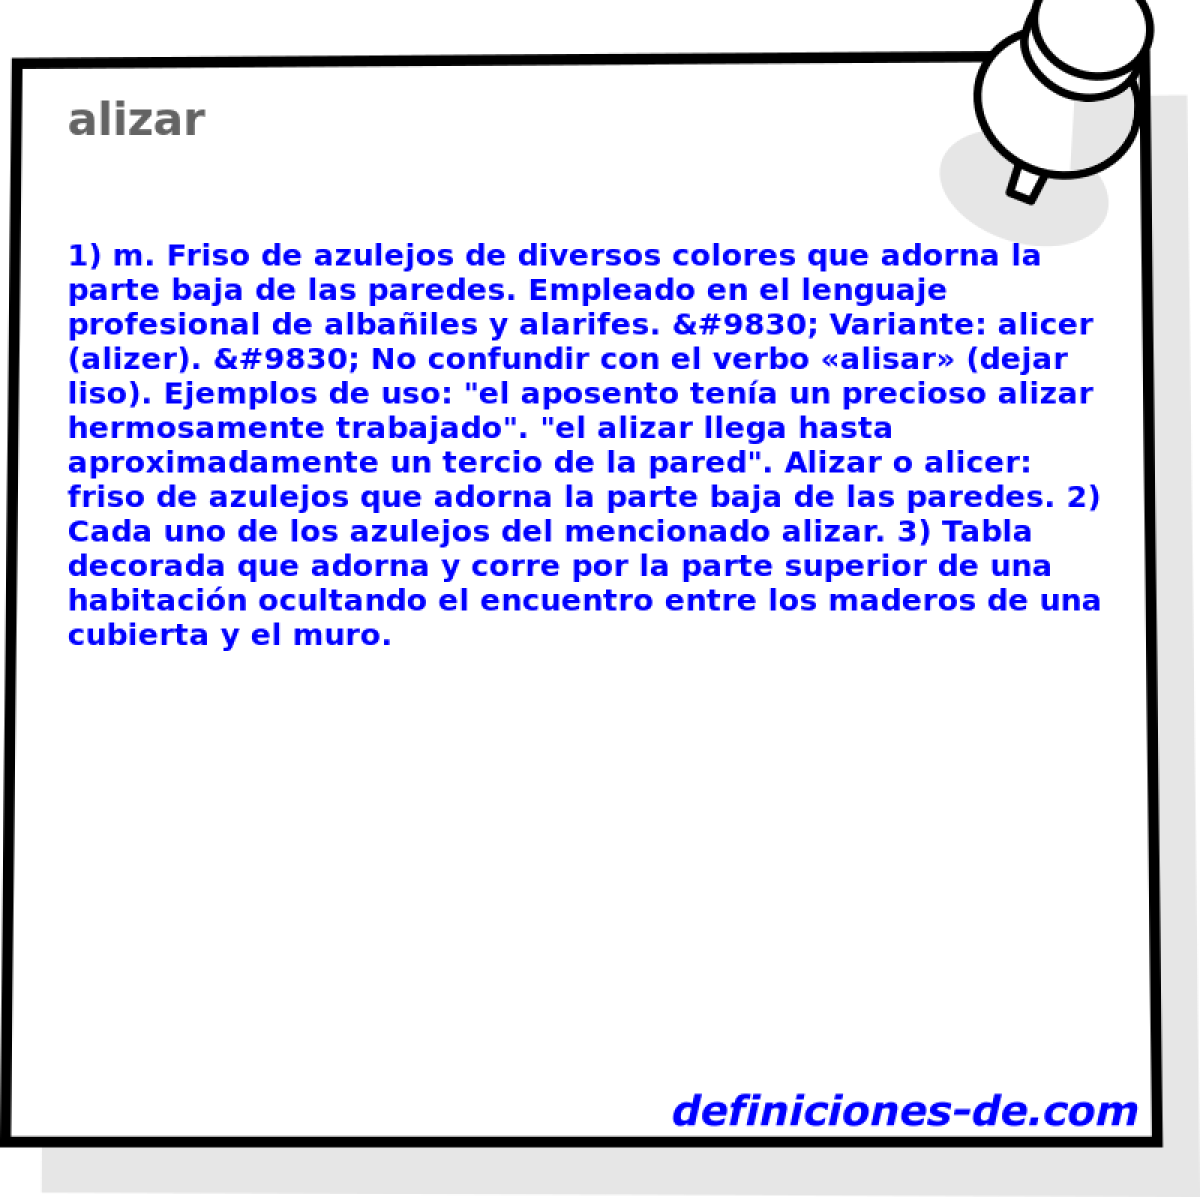 alizar 